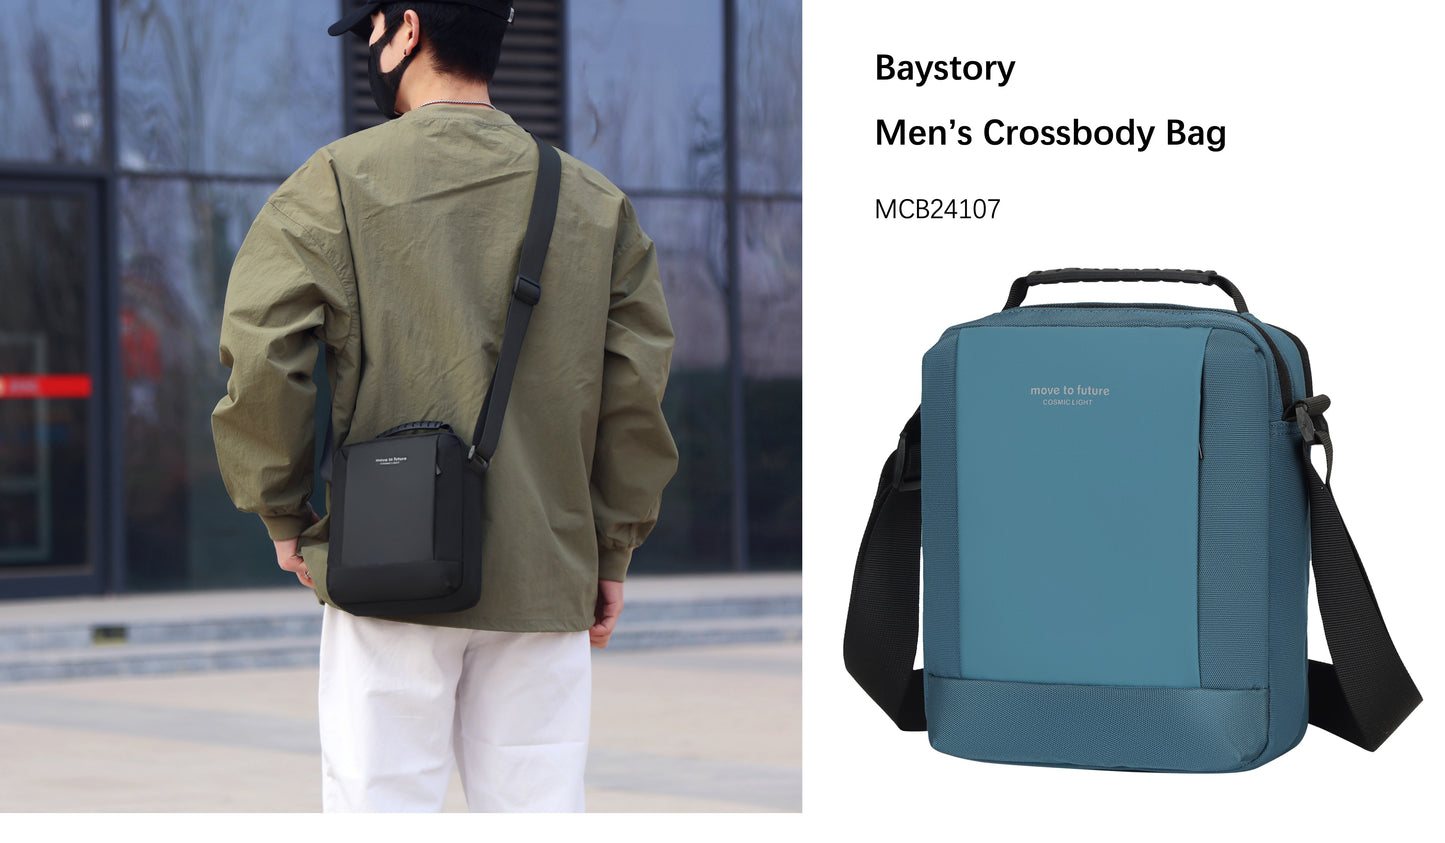 Baystory Men’s Crossbody Bag MCB24107 - Baystory